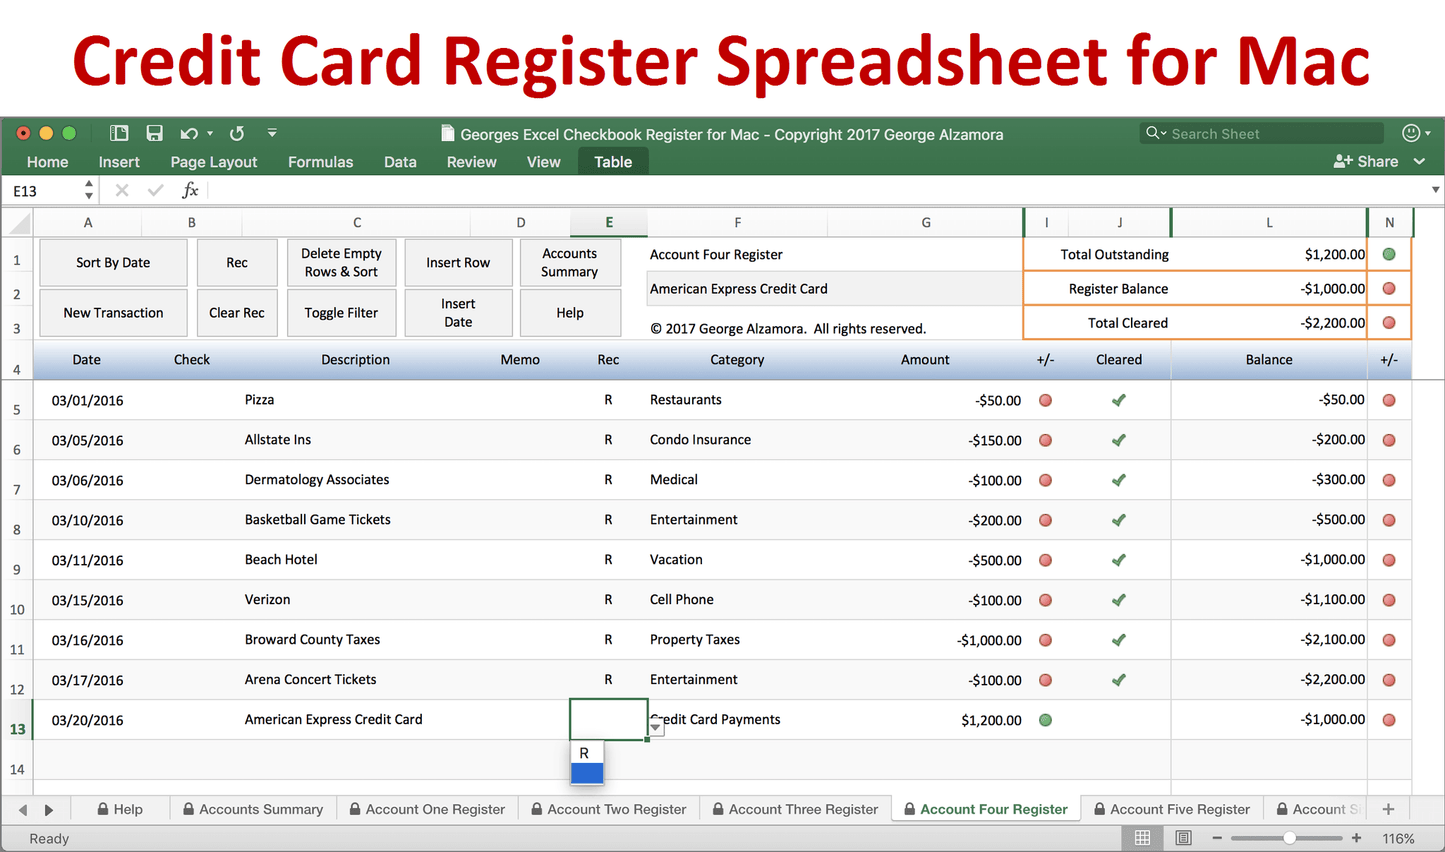 Credit card register software for Mac